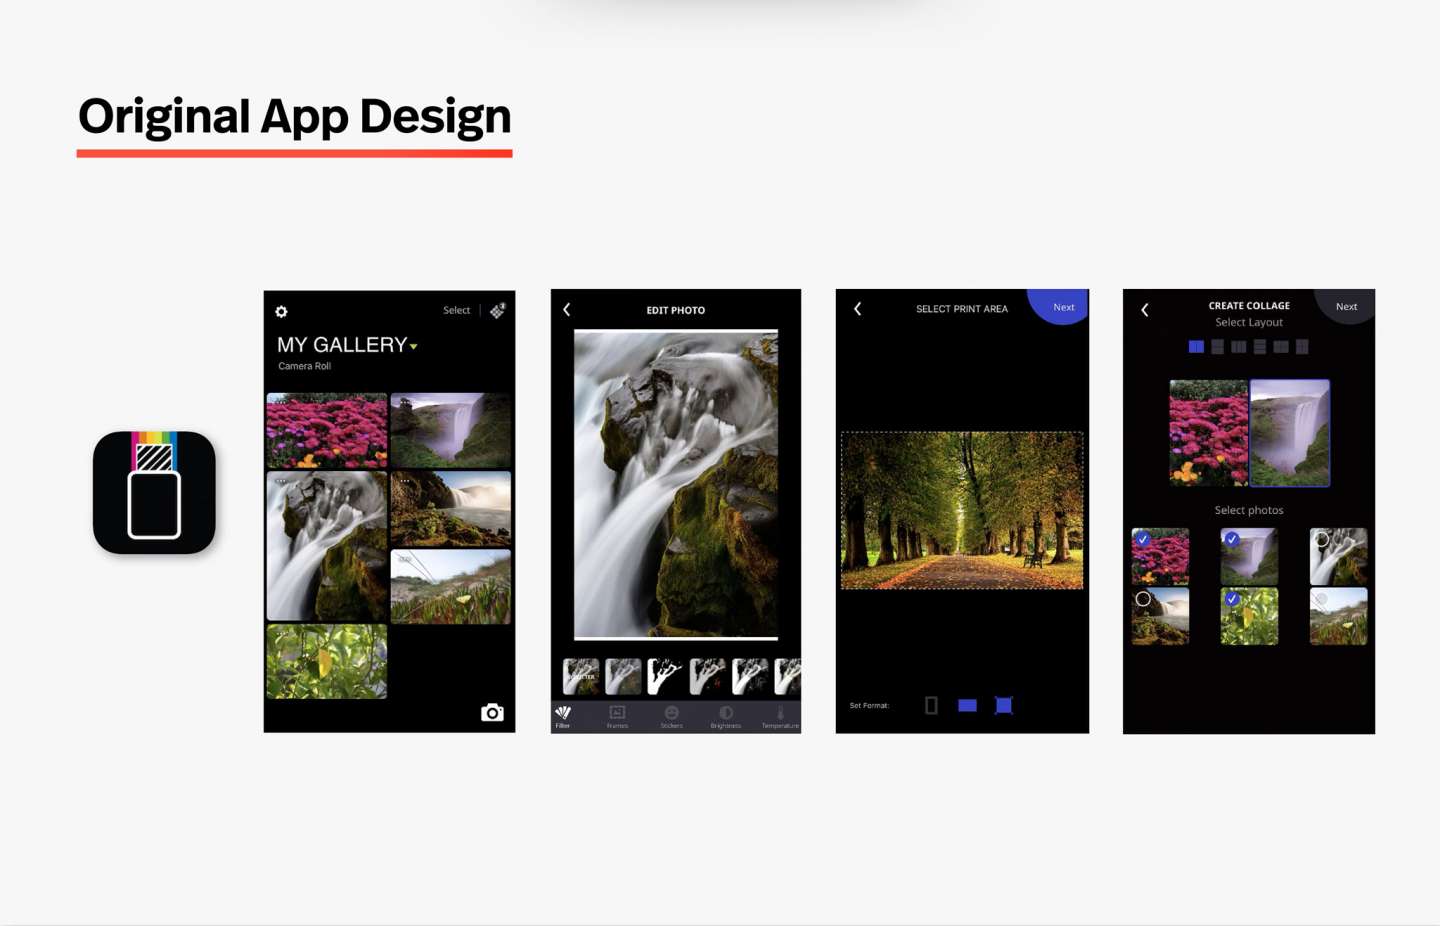 Polaroid Zip App Redesign